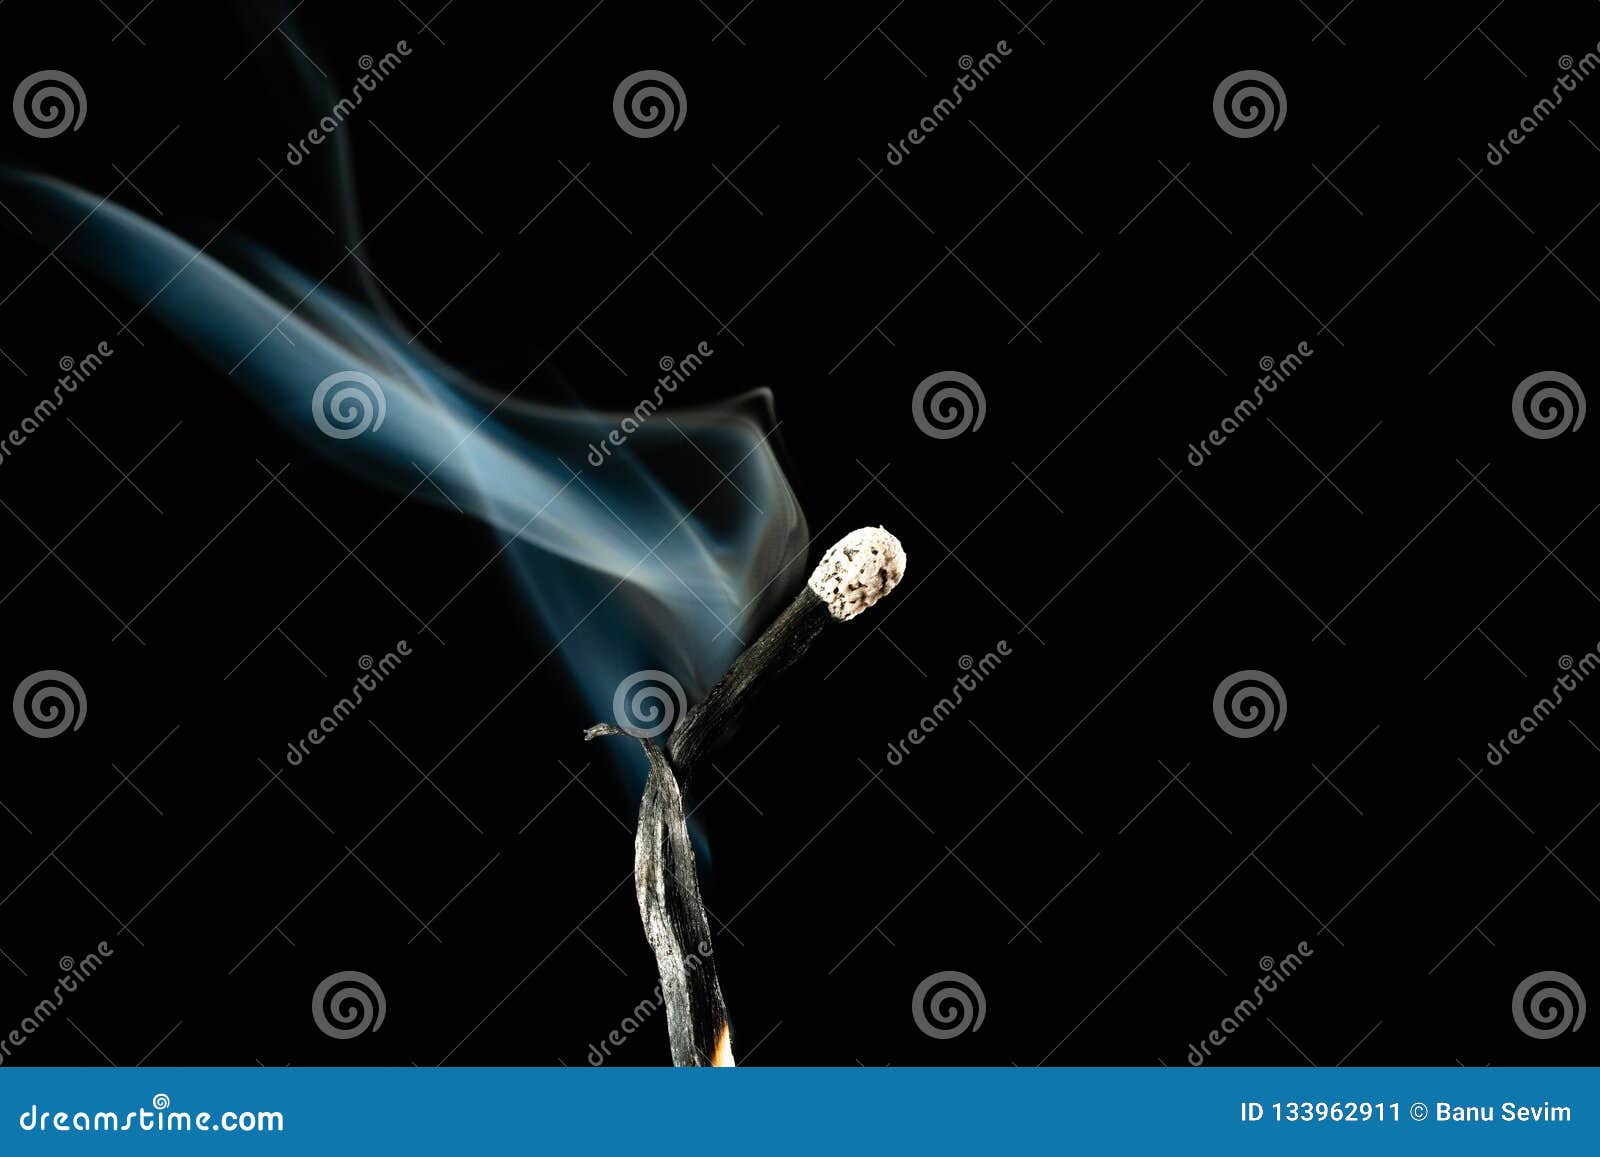 Burnt matchstick and smoke stock image. Image of danger - 133962911